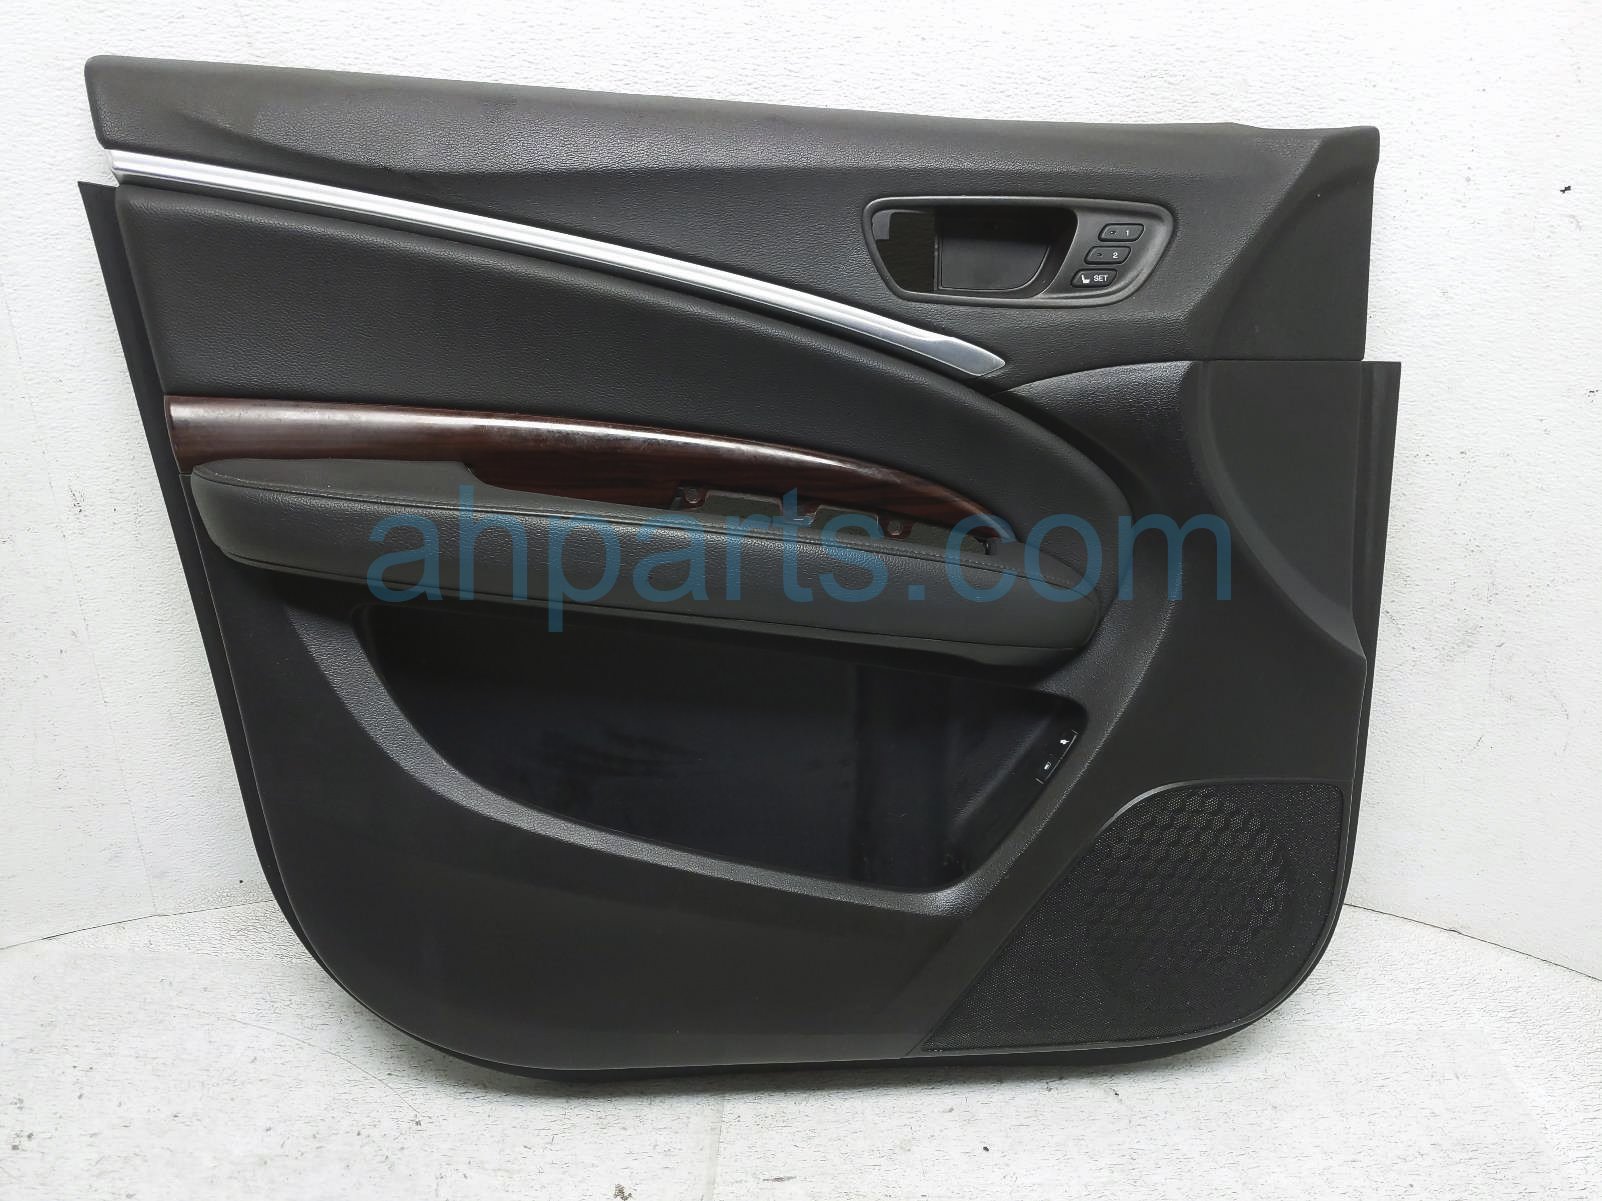 $125 Acura FR/LH INTERIOR DOOR PANEL - BLACK